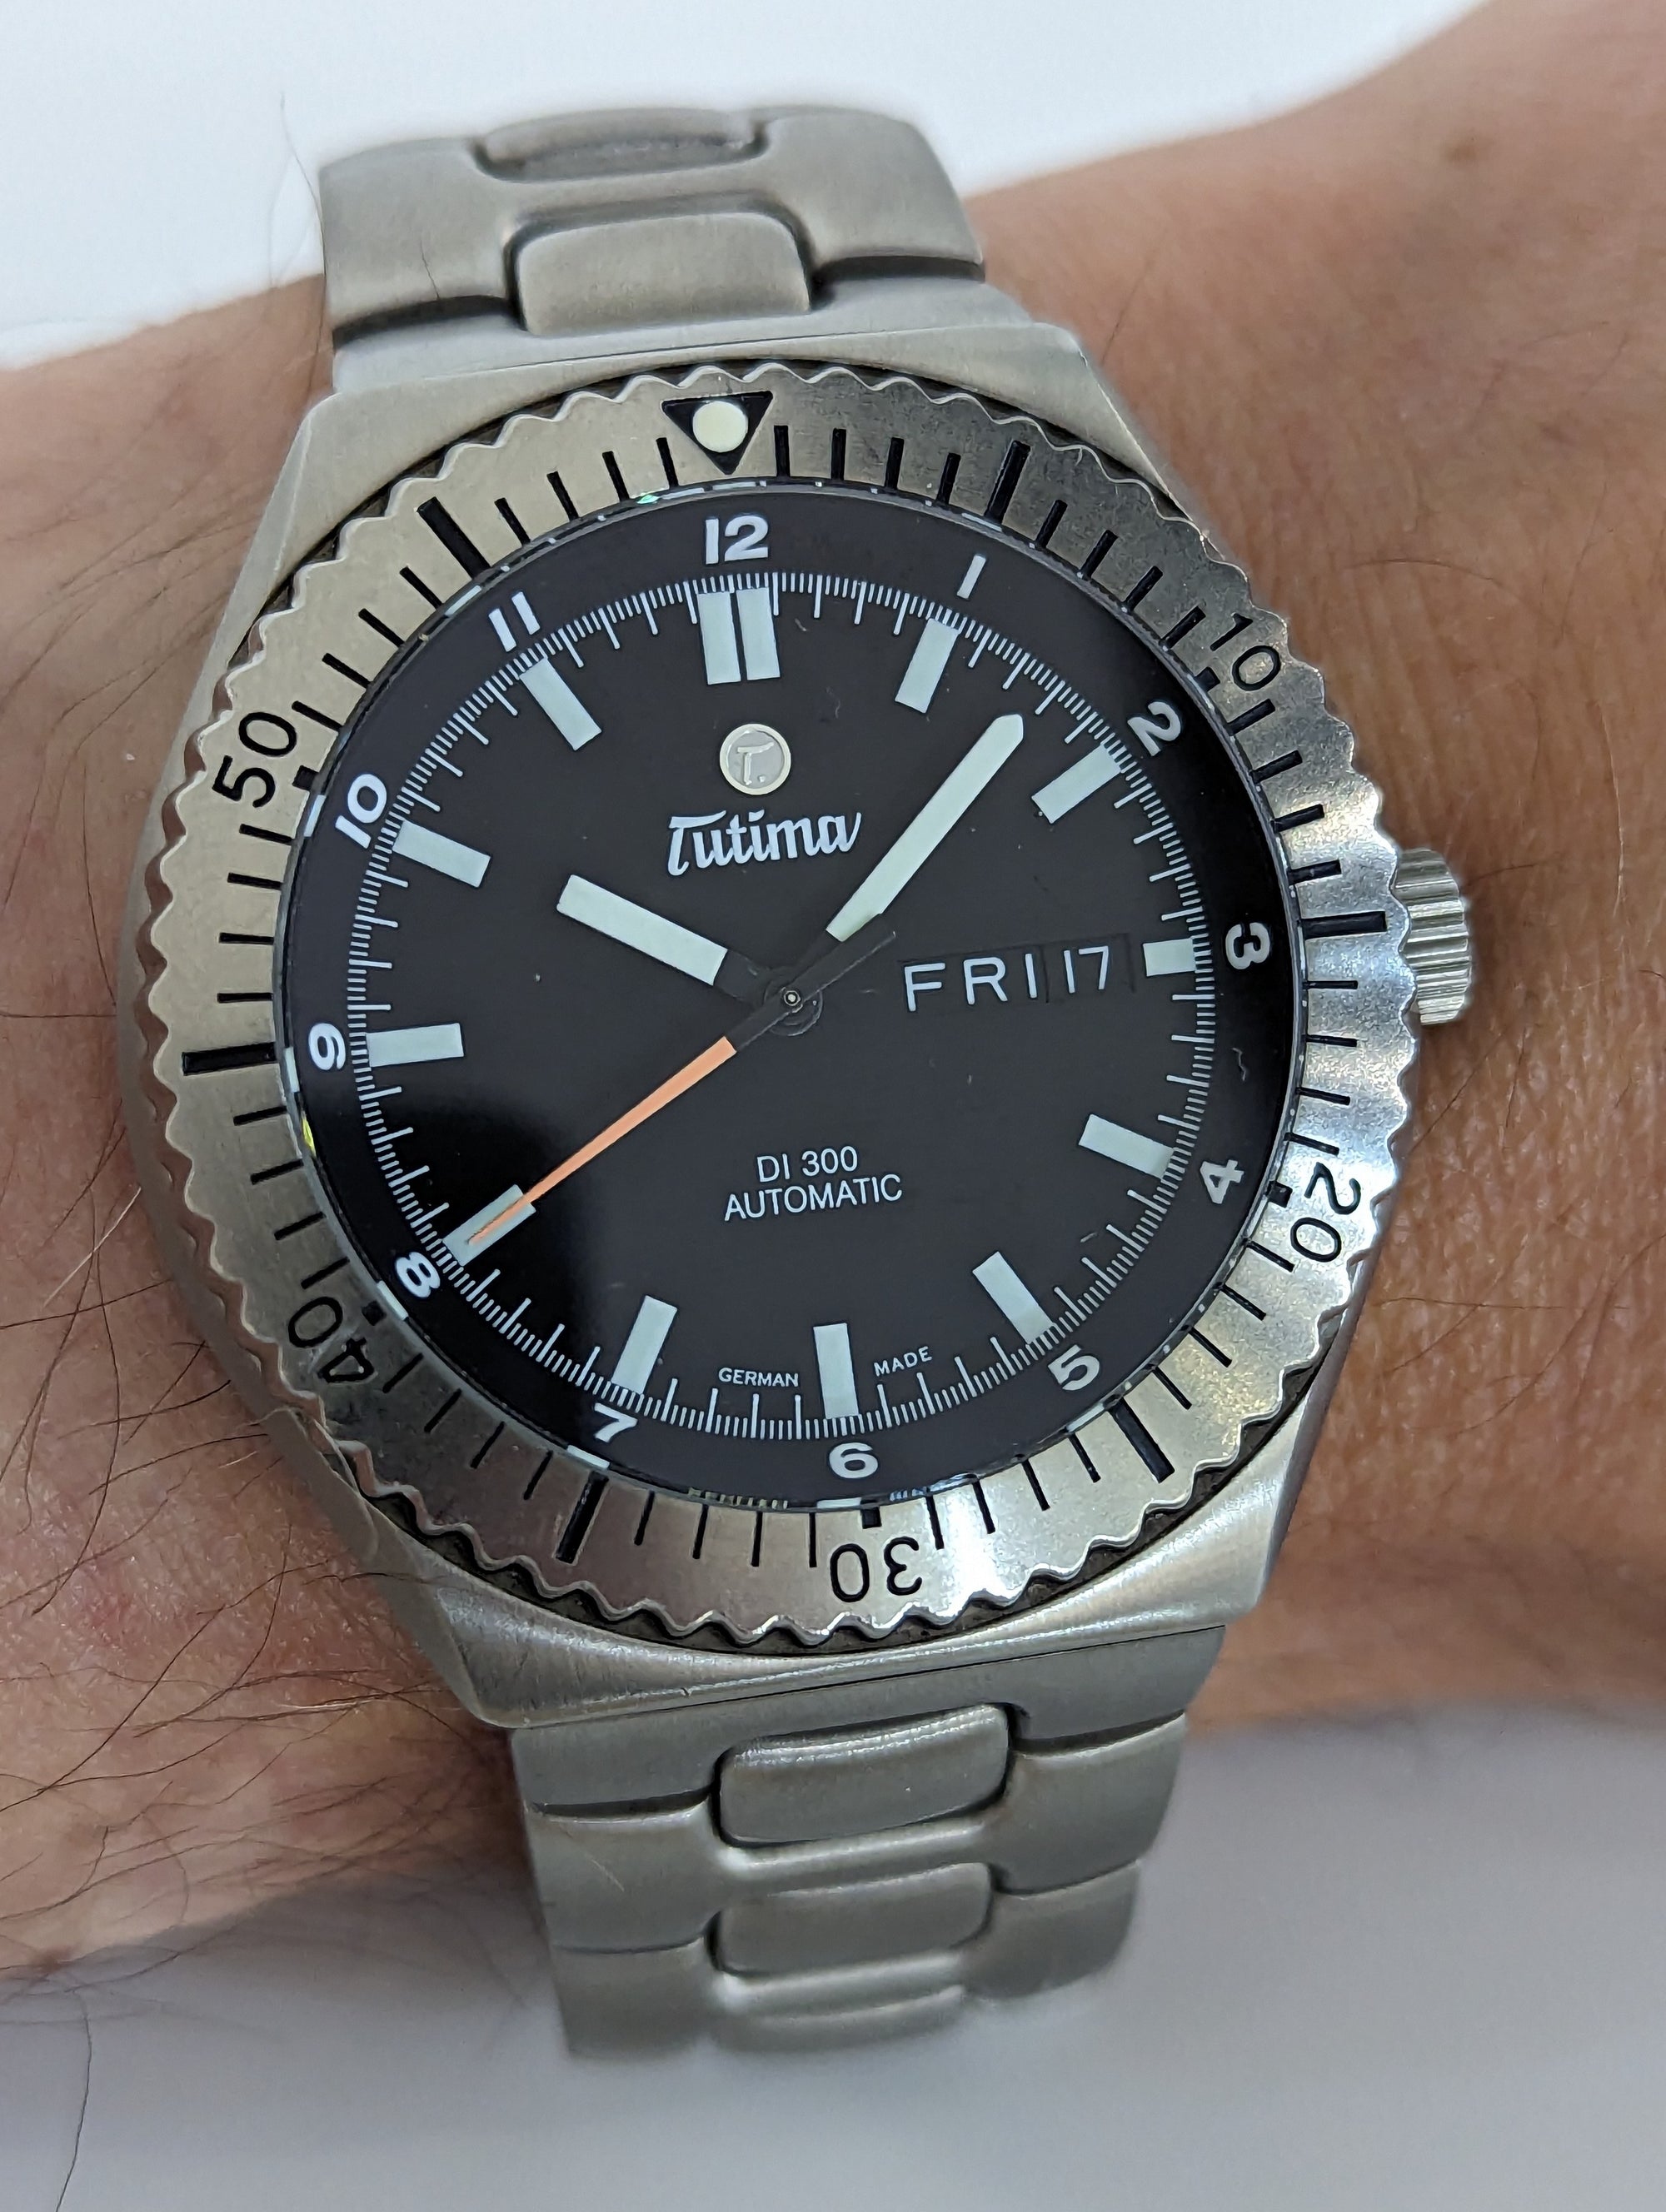 Tutima DI300 Titanium Wristwatch